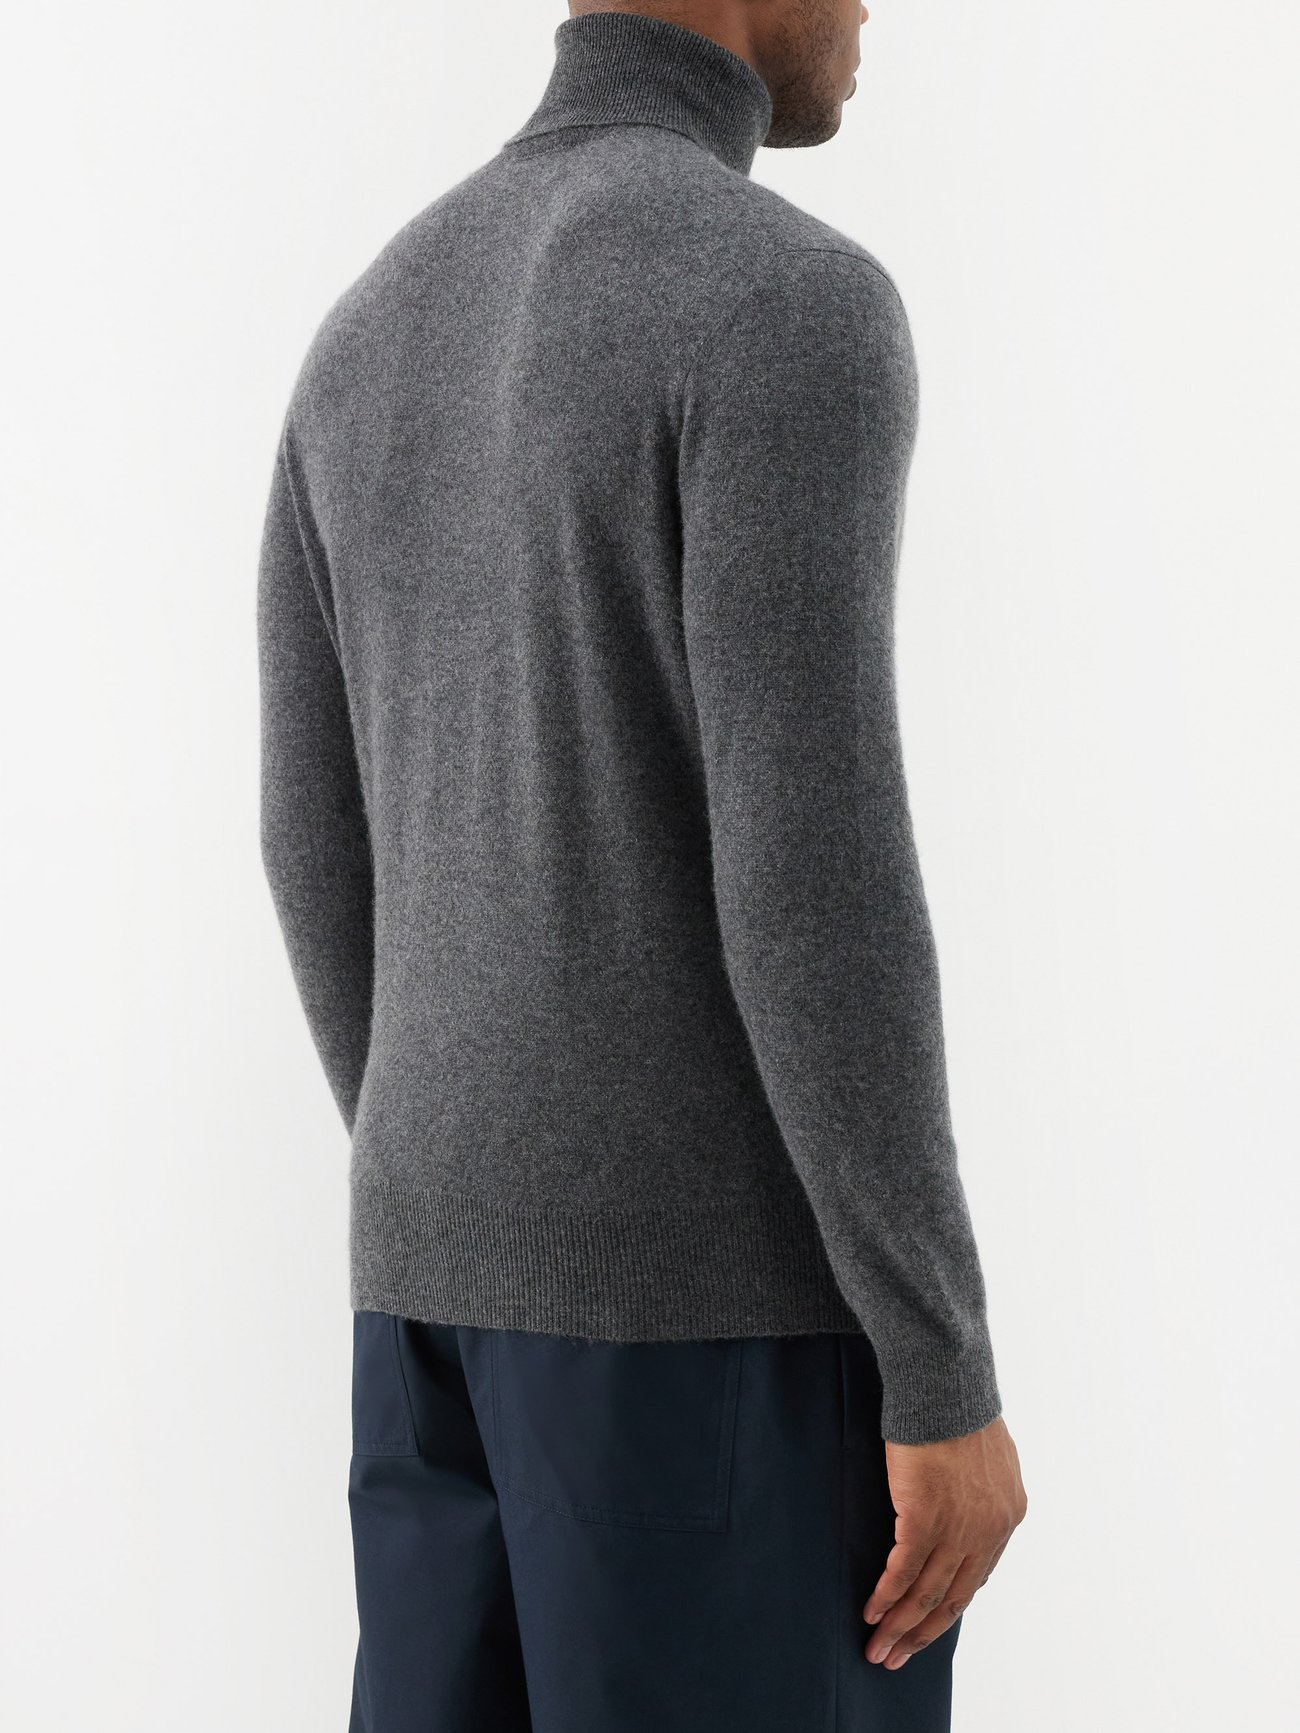 Grey Roll-neck fine-knit cashmere sweater, Raey